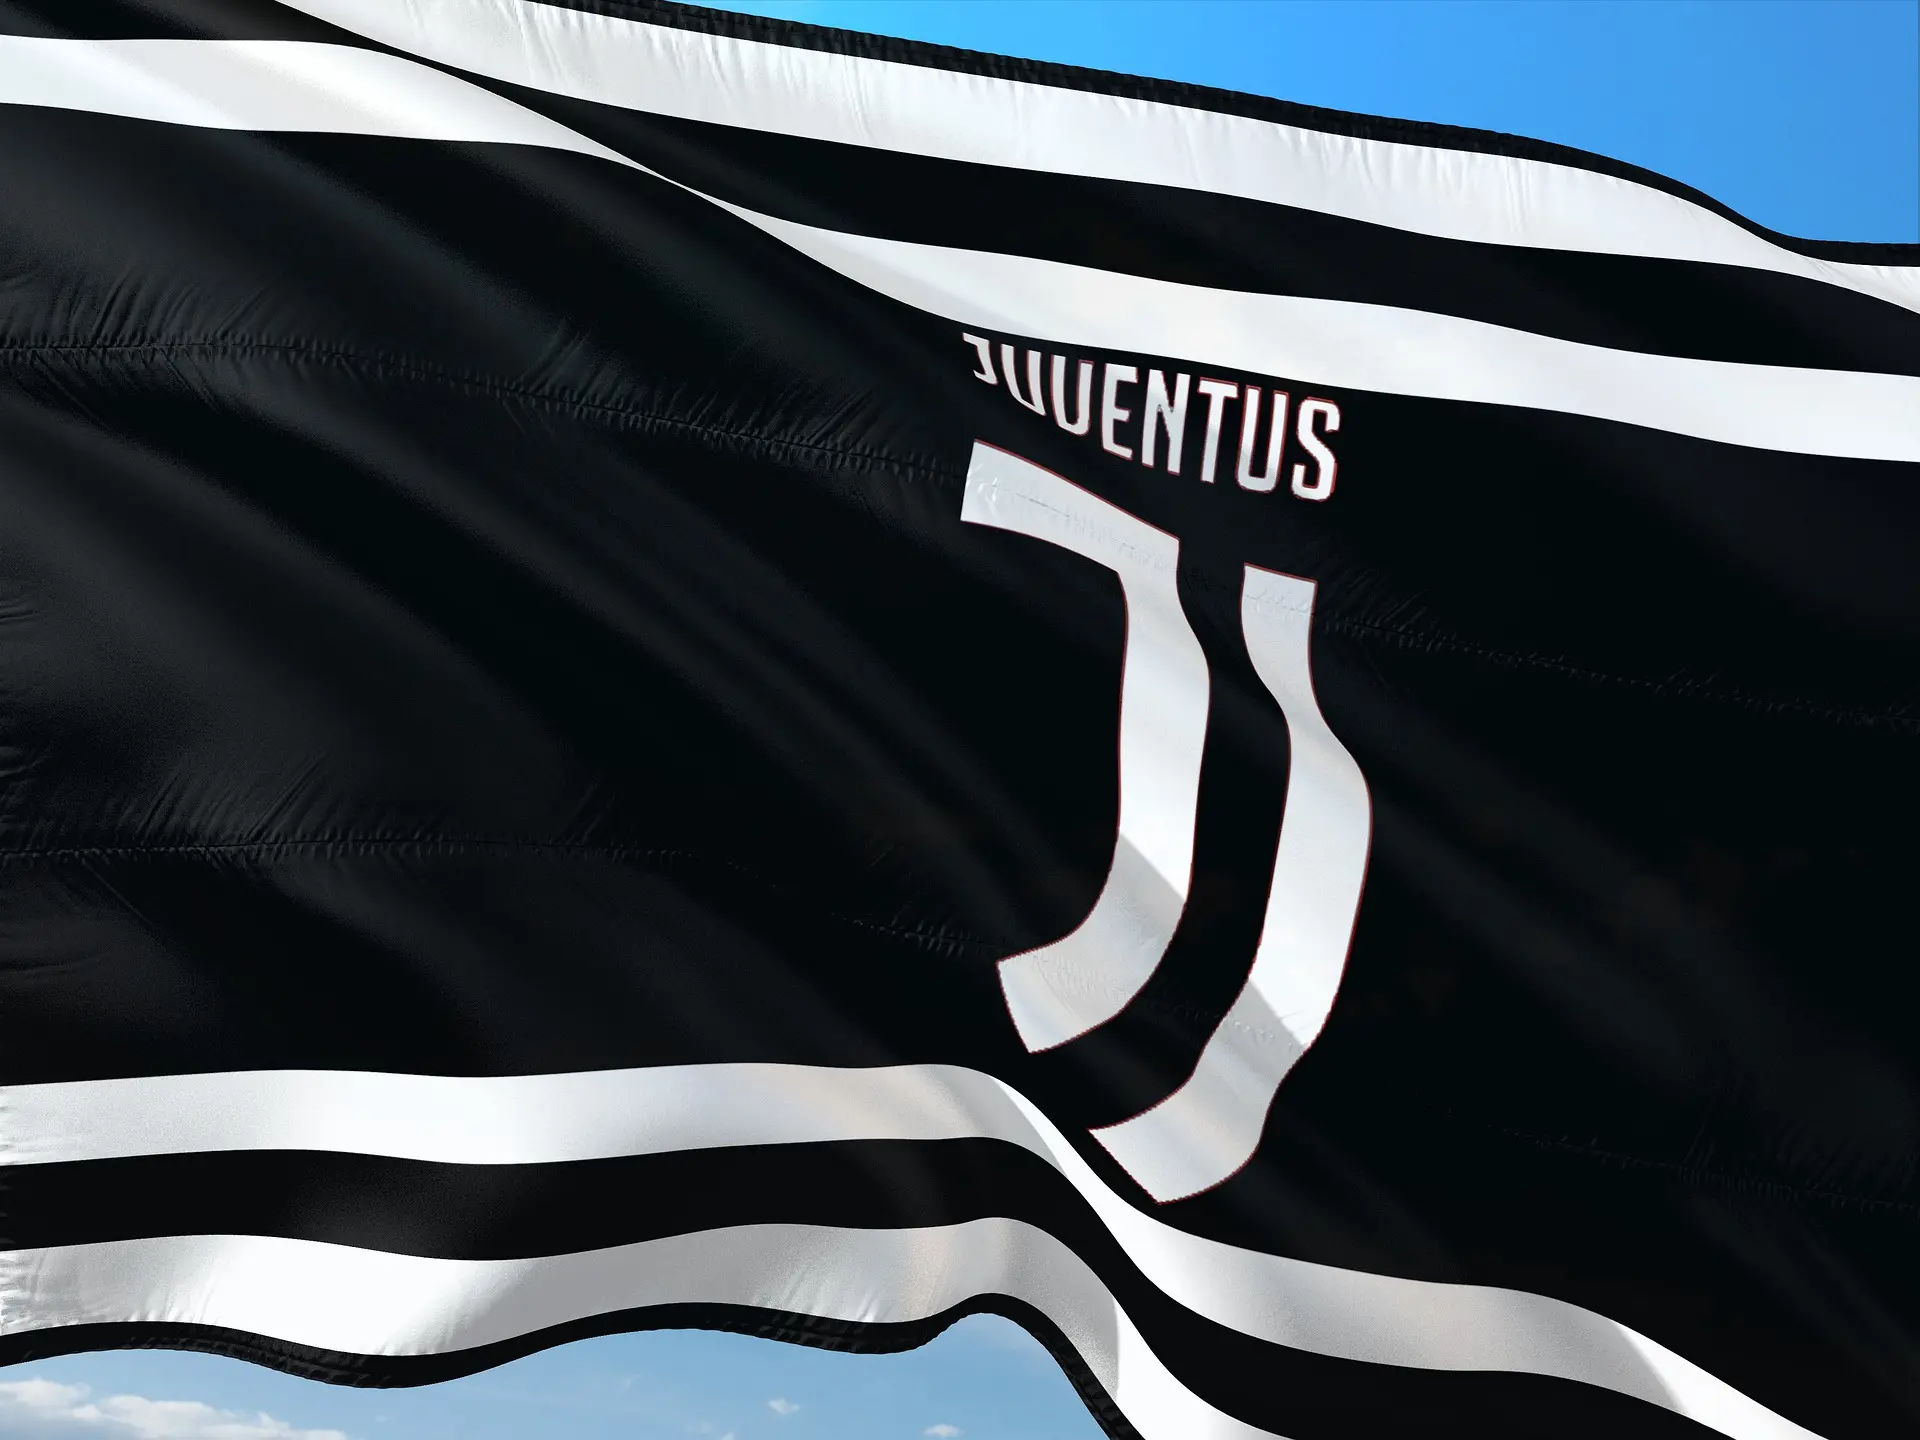 The Juventus logo on a flag